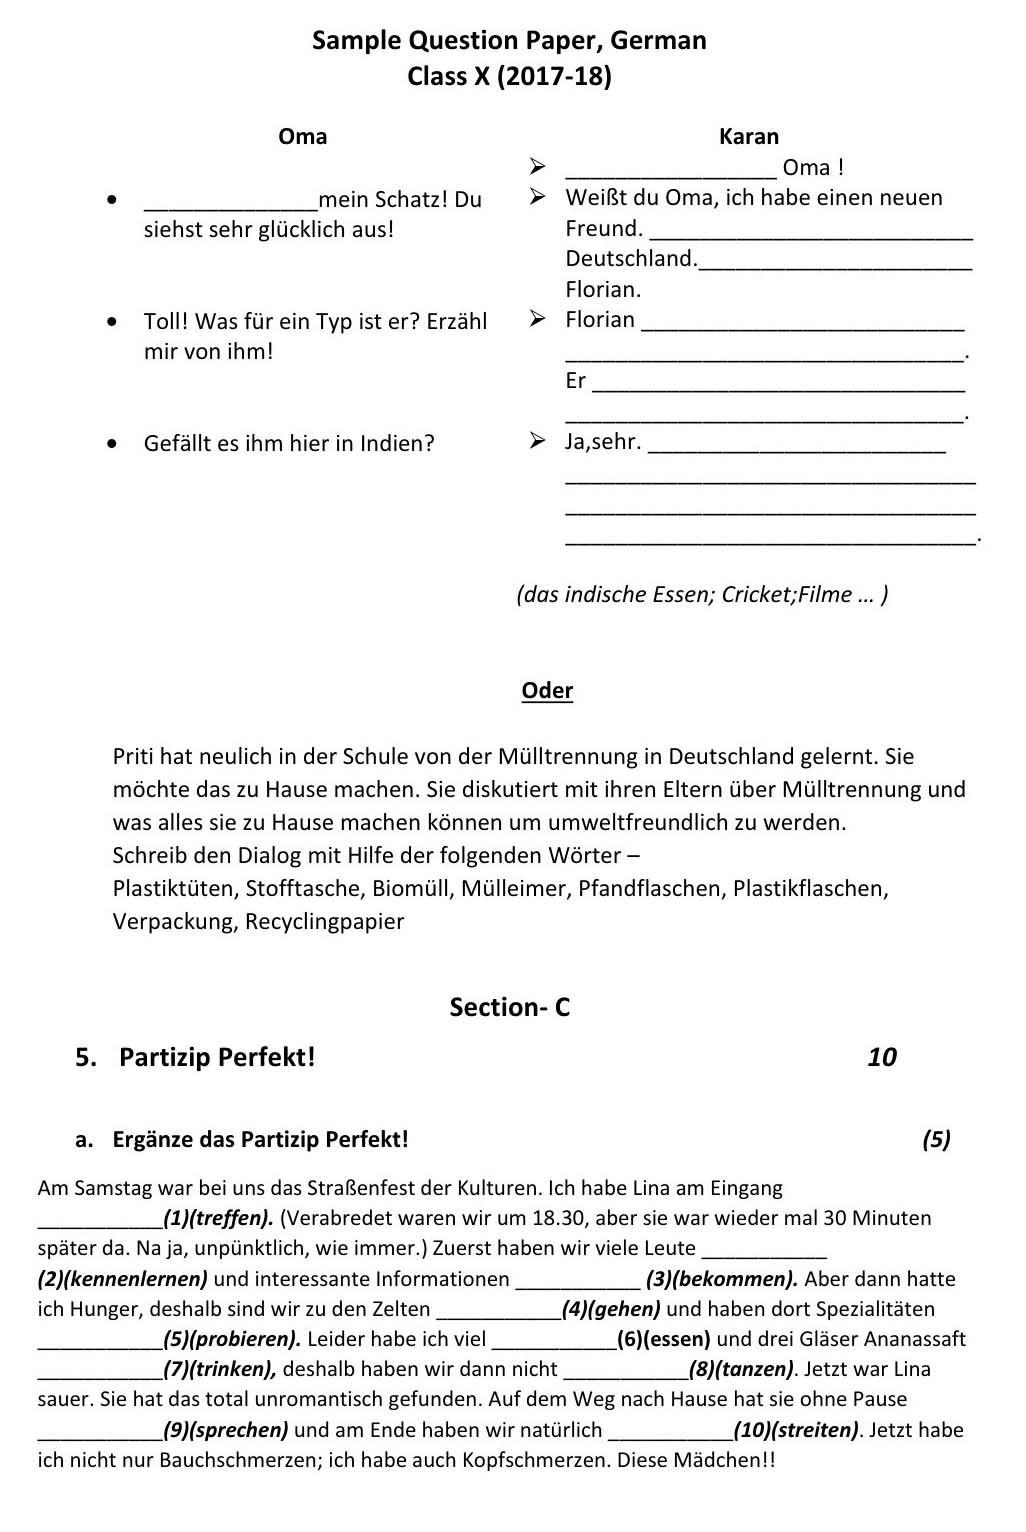 German CBSE Class X Sample Question Paper 2017 18 - Image 4